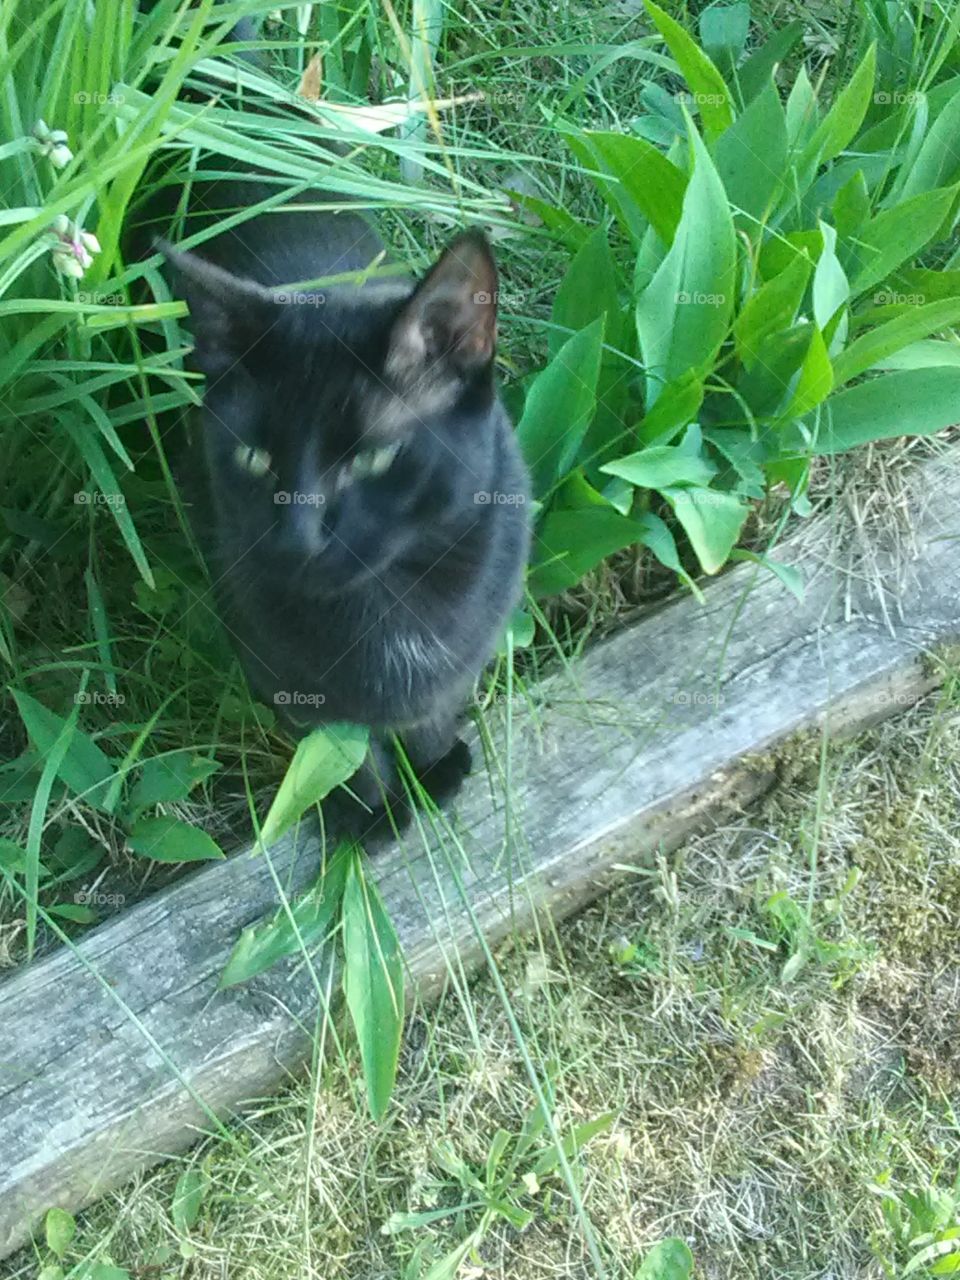 he loves grass